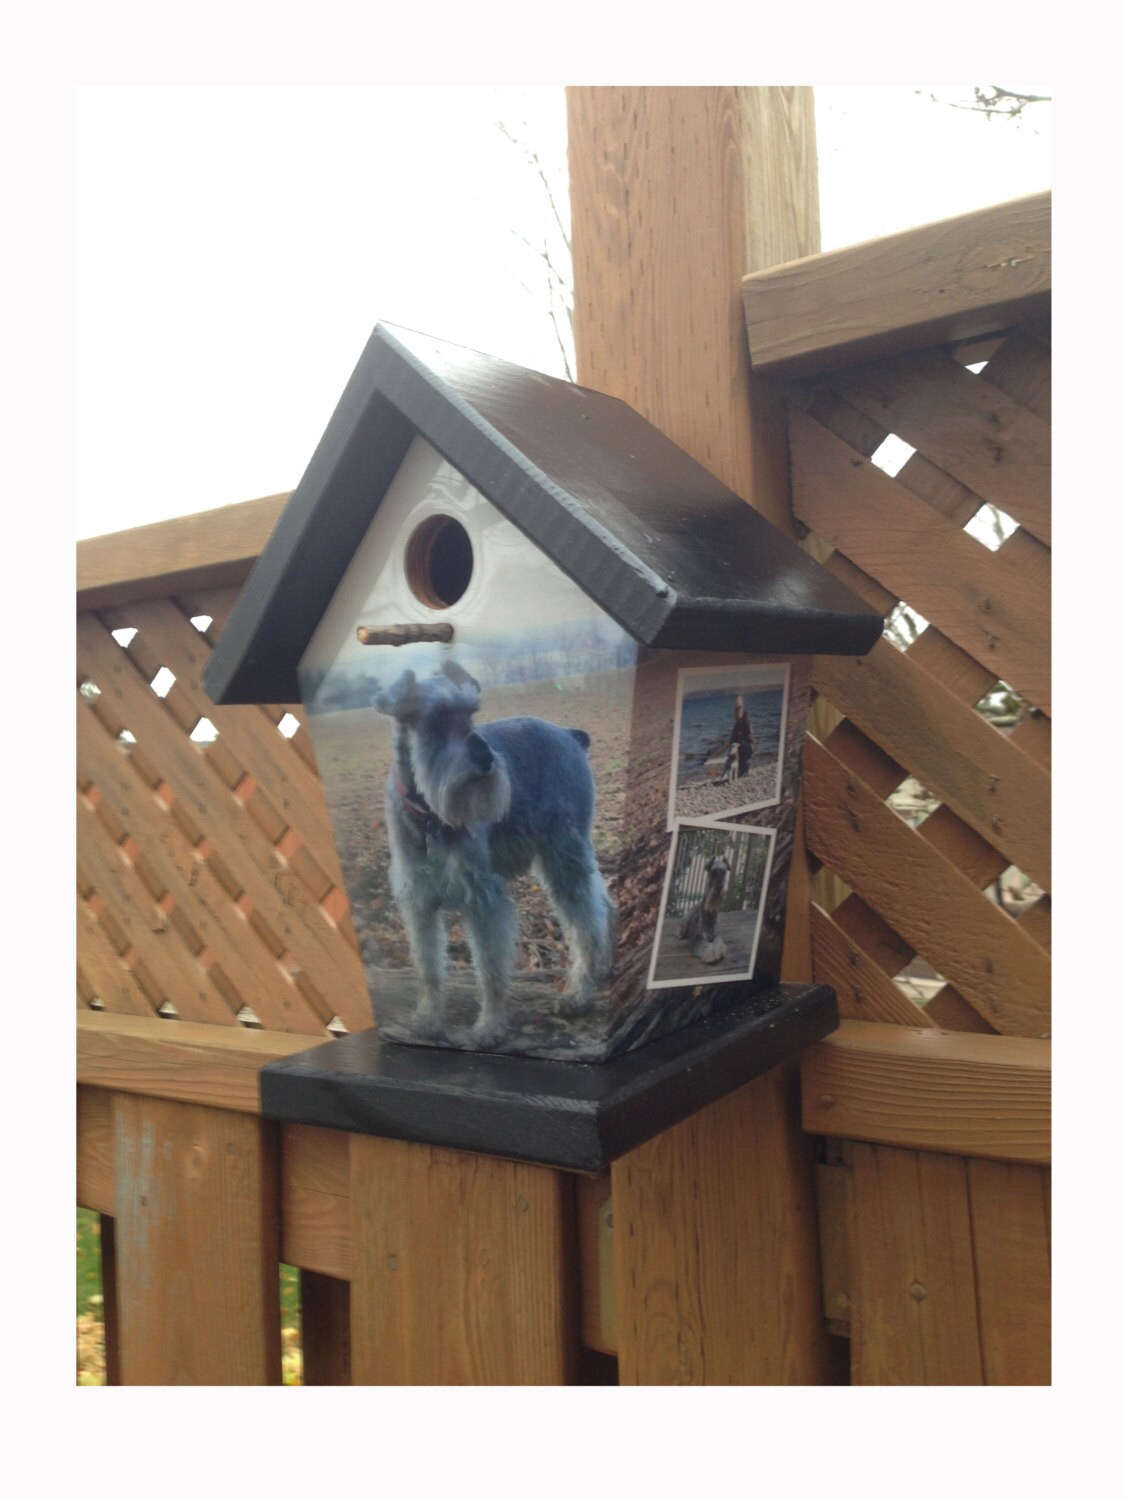 Your Pet Personalized Birdhouse